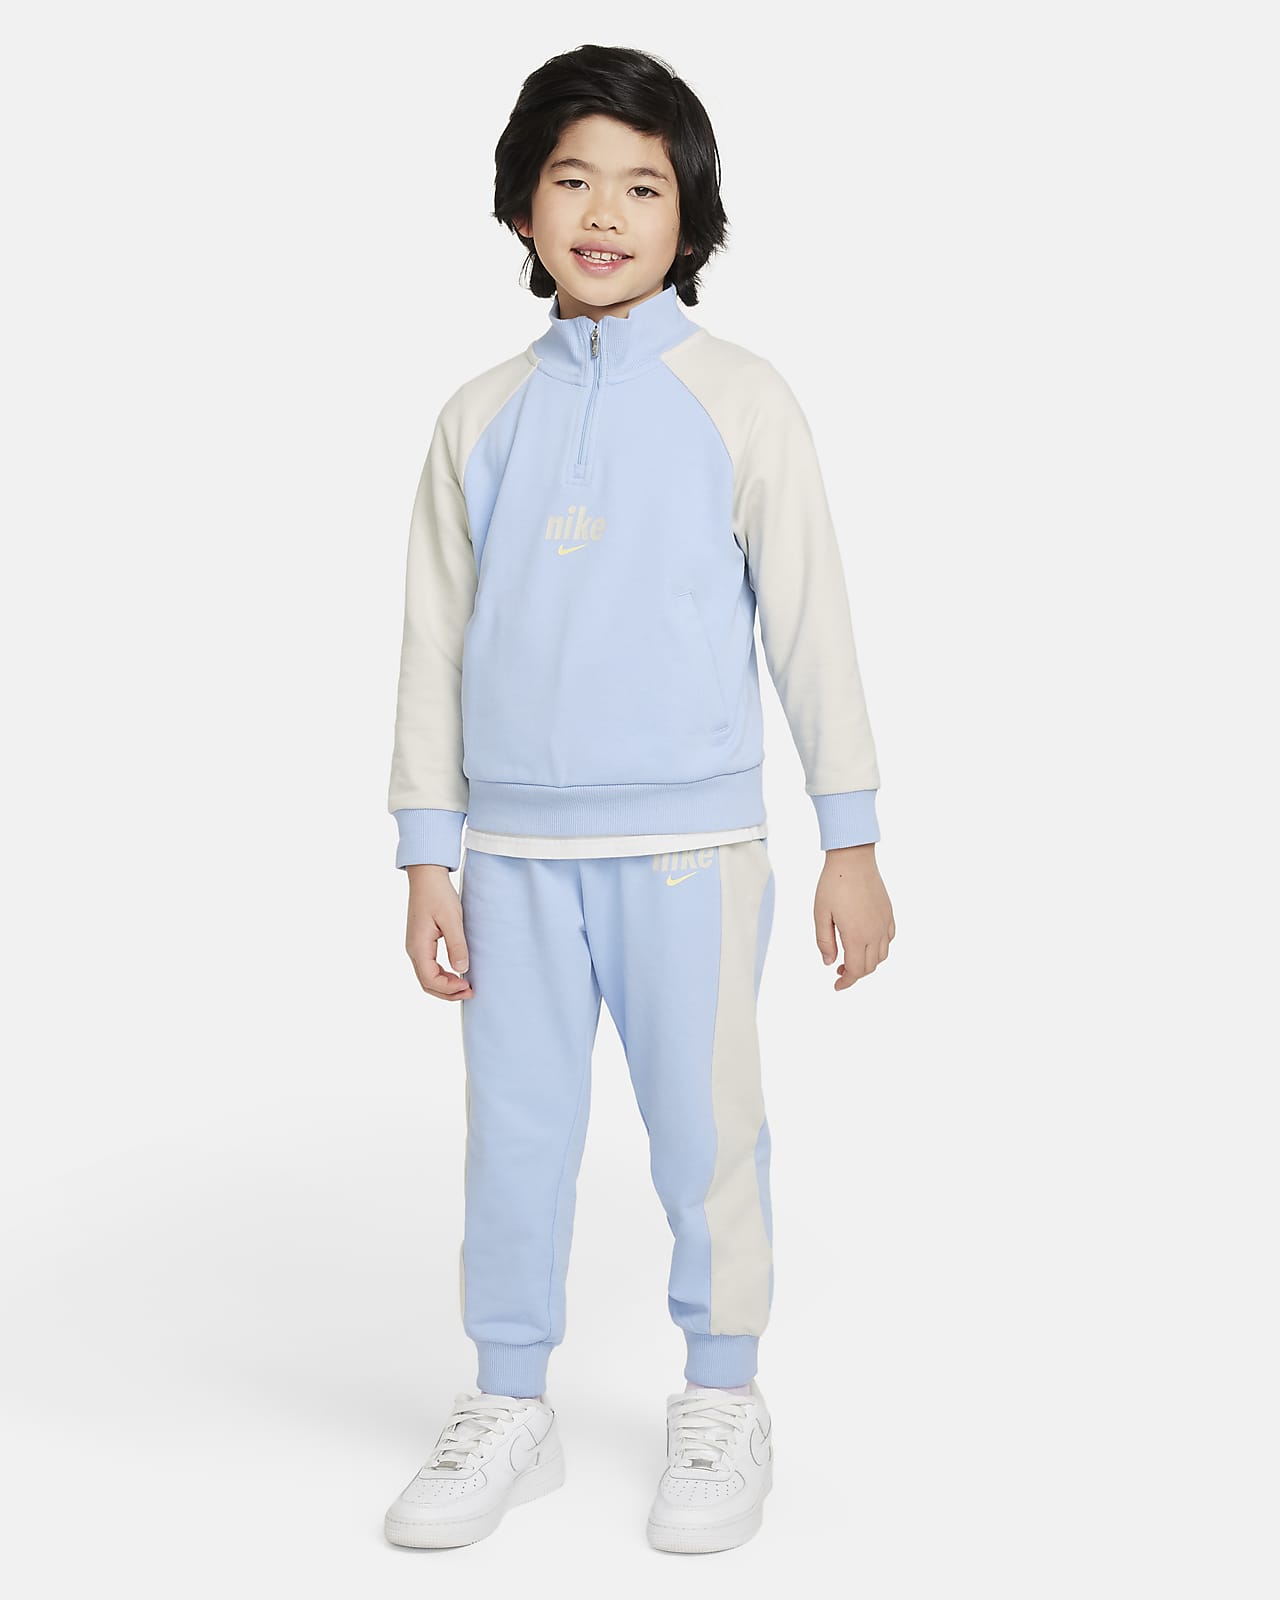 Nike E1D1 幼童上衣和长裤套装